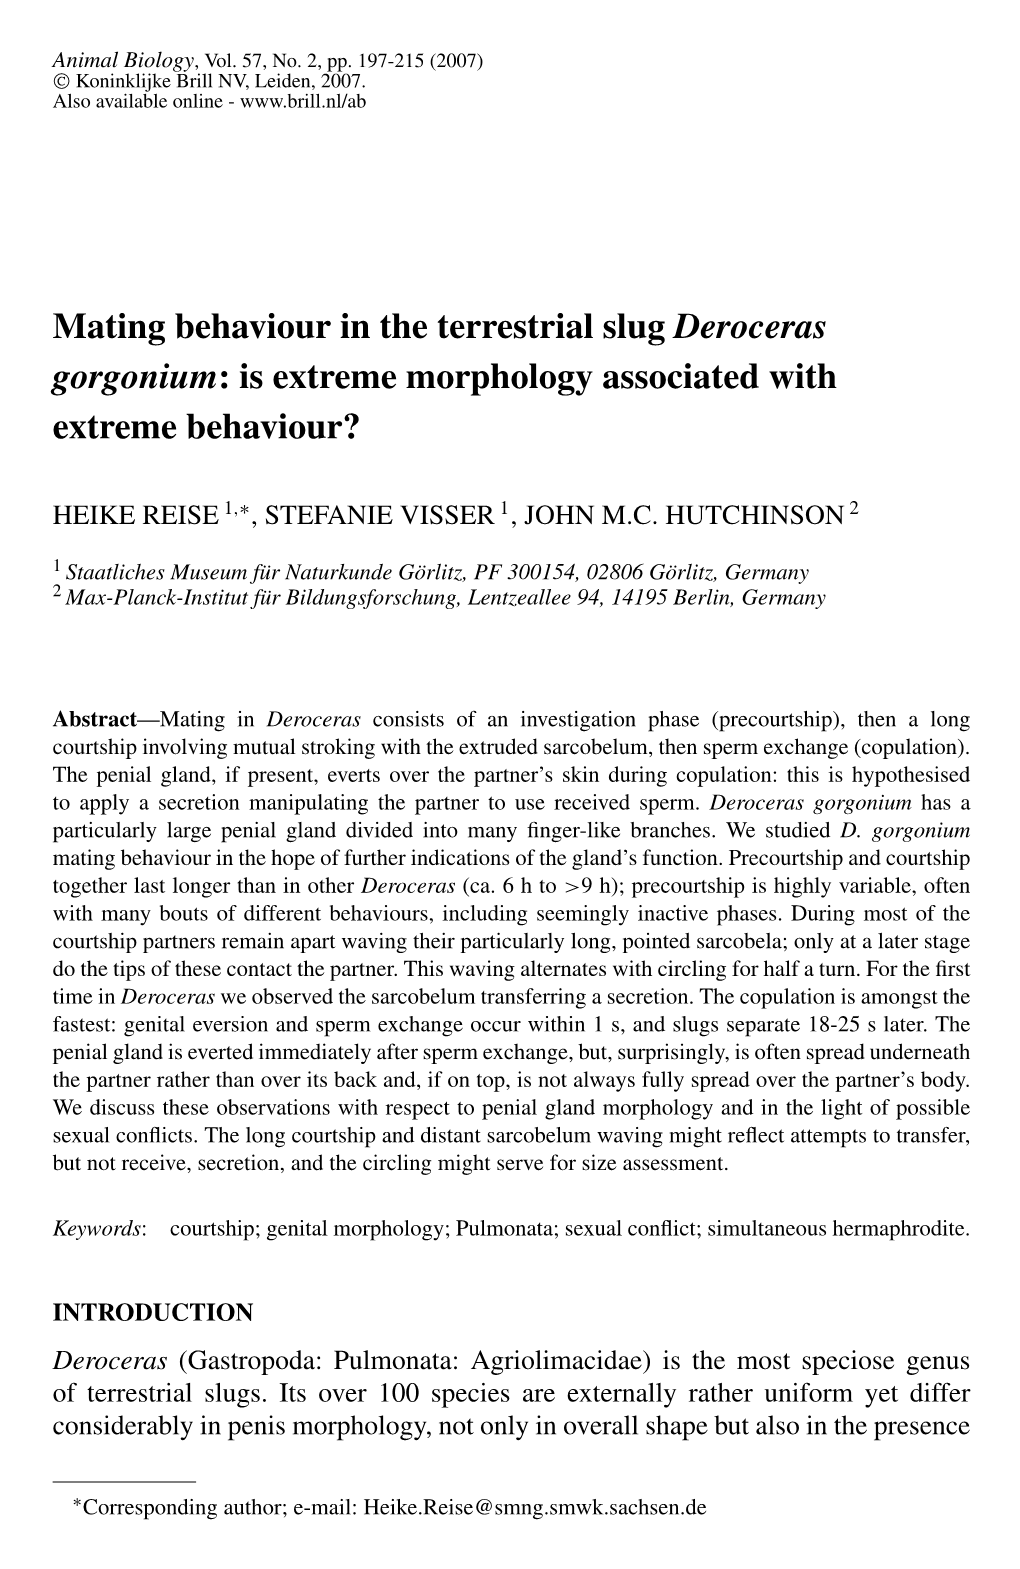 Mating Behaviour in the Terrestrial Slug Deroceras Gorgonium: Is Extreme Morphology Associated with Extreme Behaviour?